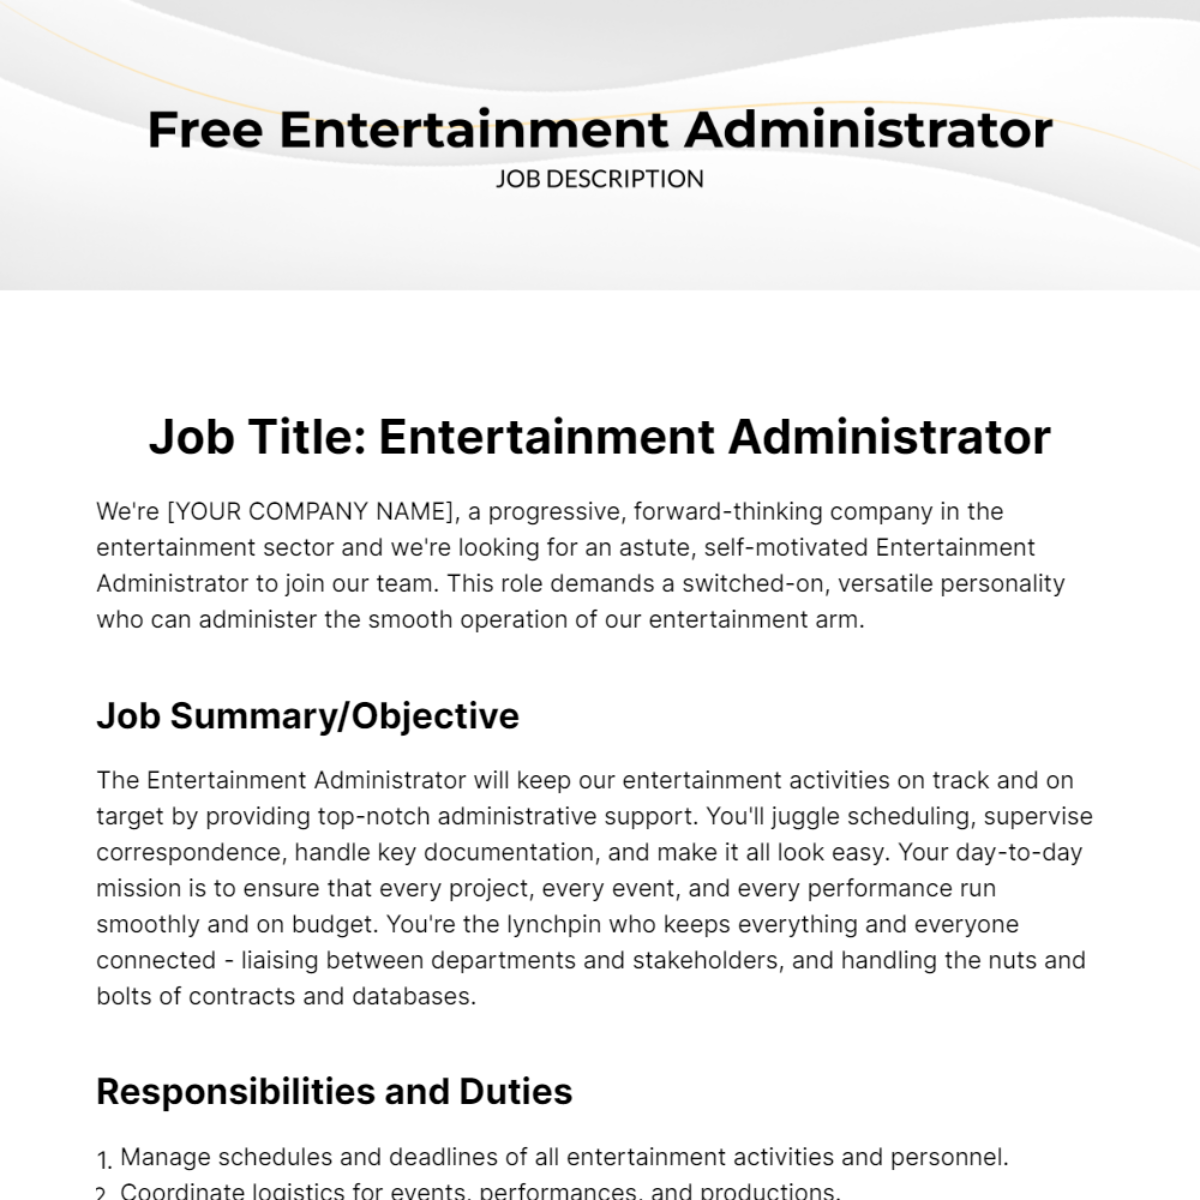 Free Entertainment Administrator Job Description Template